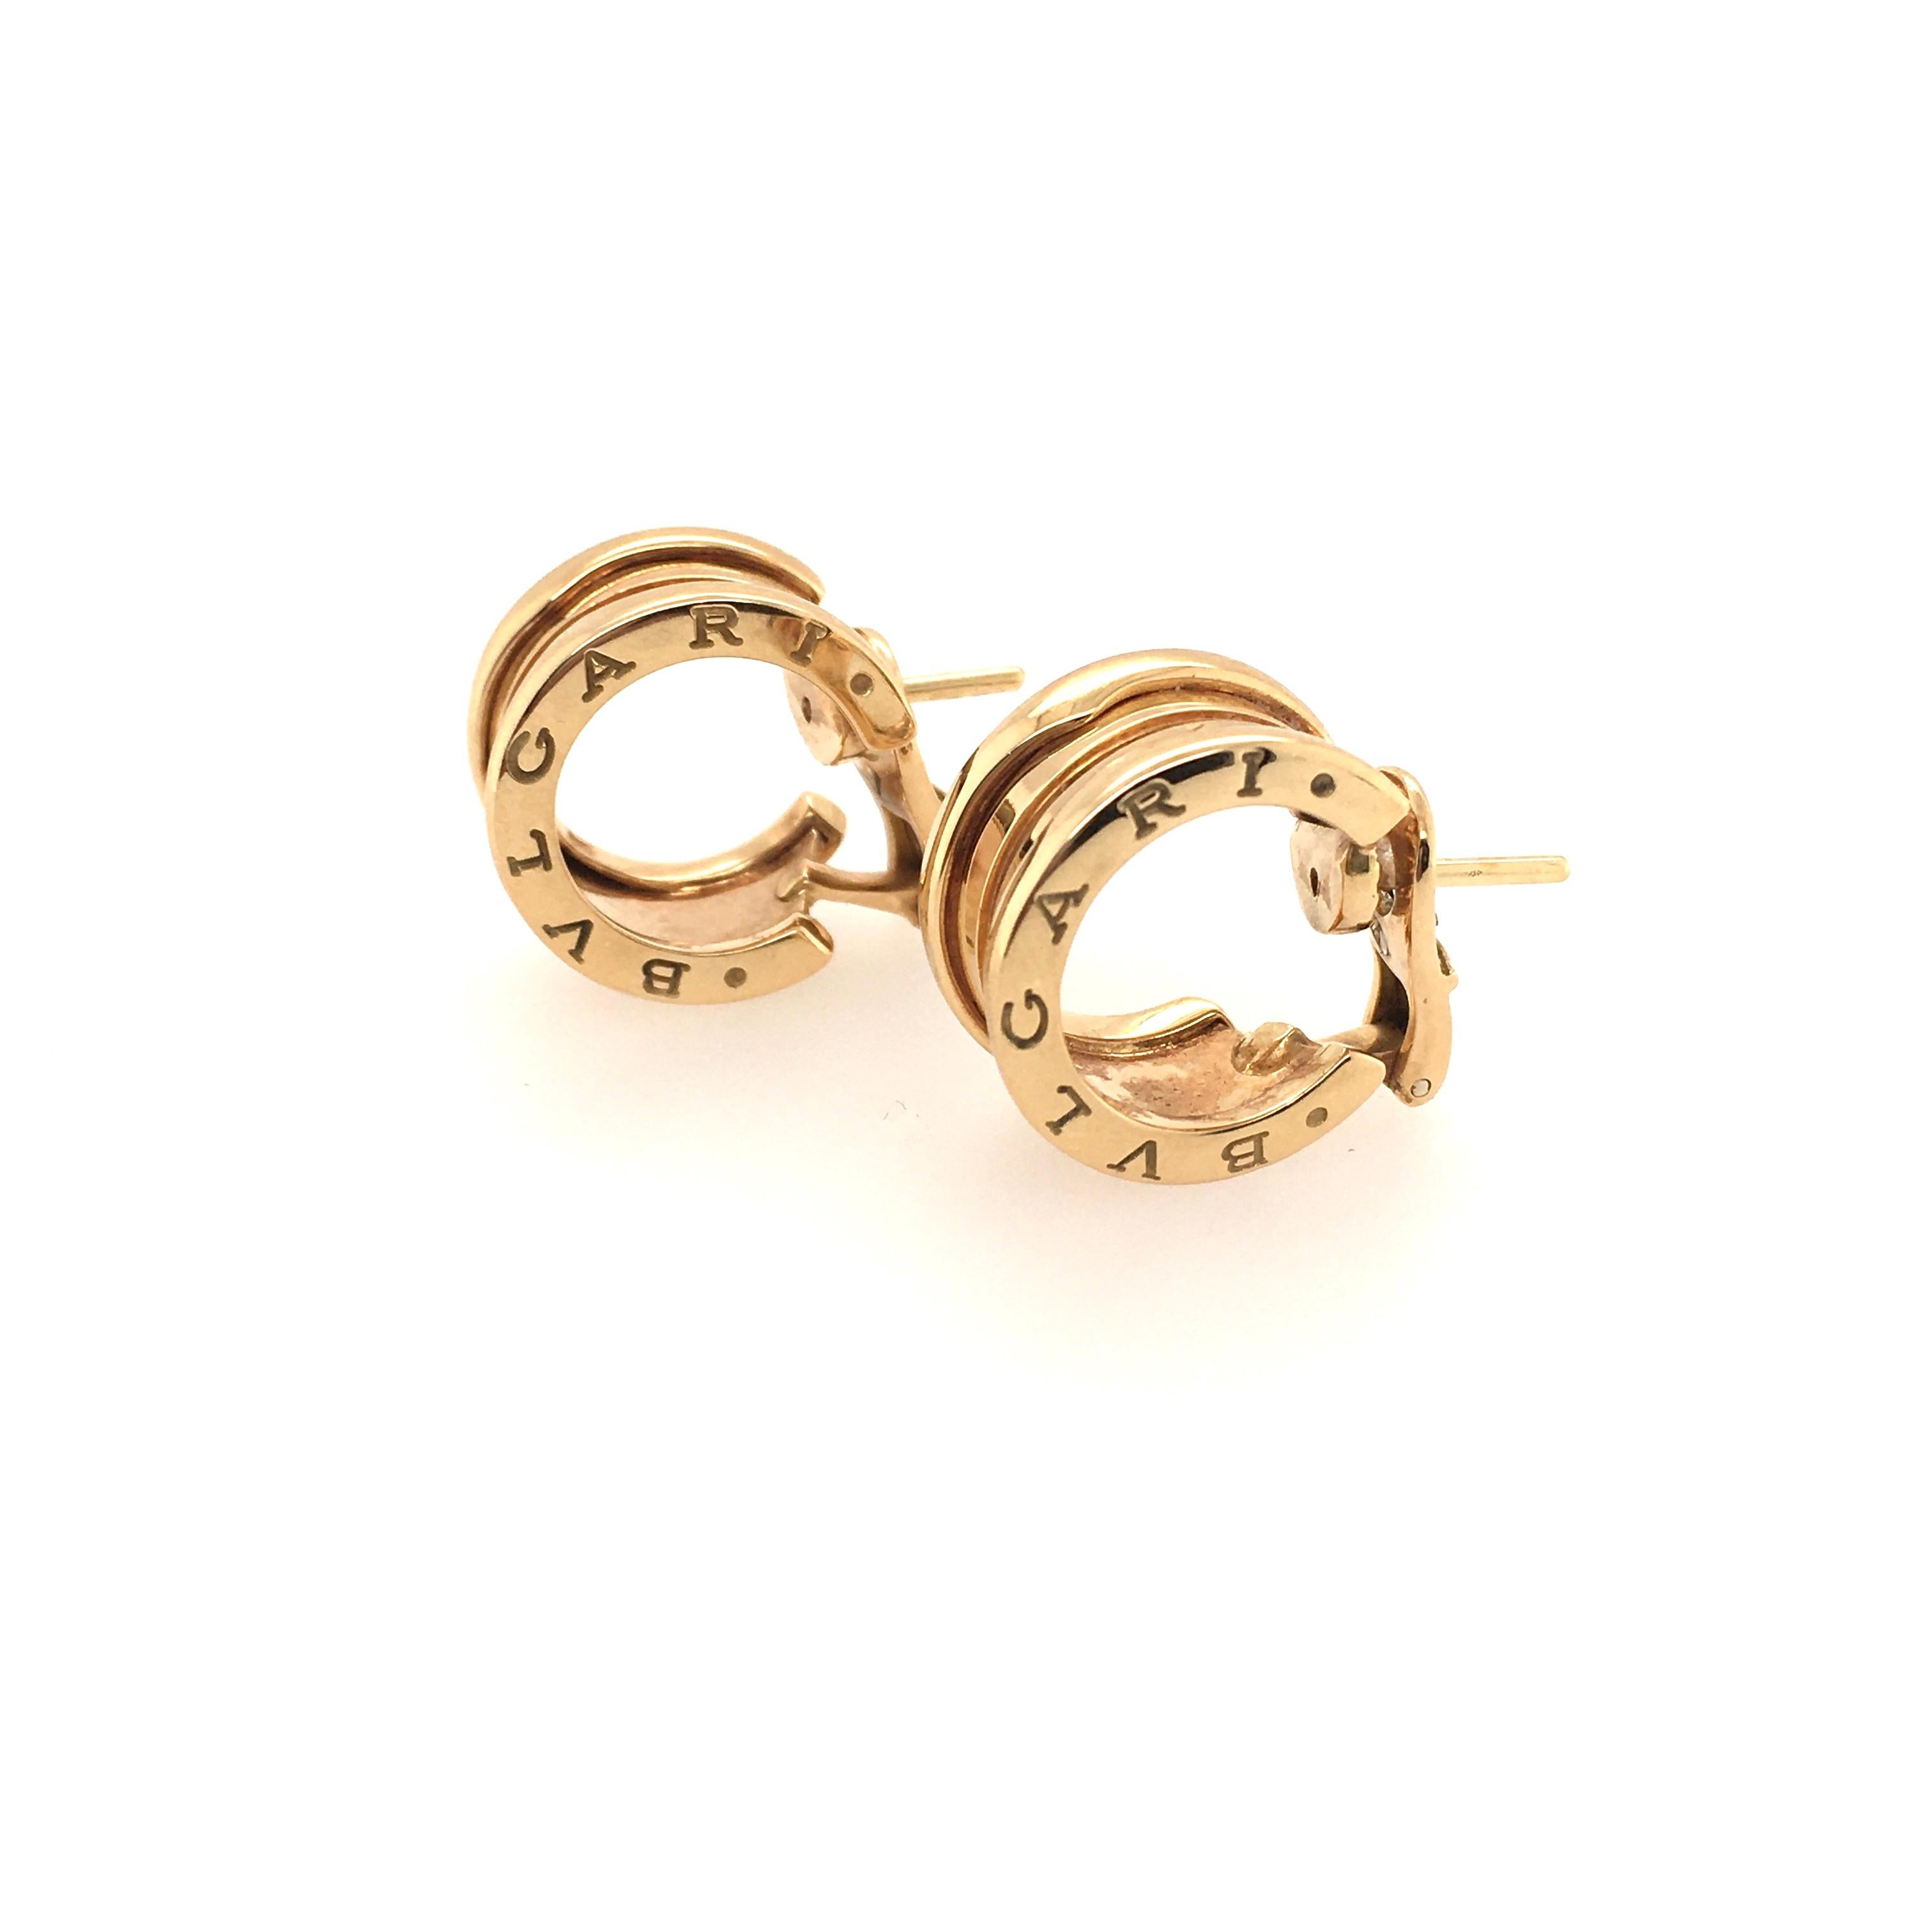 A pair of 18 karat yellow gold B Zero-1 Wide Hoop earrings. Bulgari. Designed as a polished gold hoop. Width is approximately 9mm, diameter is approximately 1/2 inch, gross weight is approximately 15.4 grams. Stamped Bulgari, with Italian assay mark